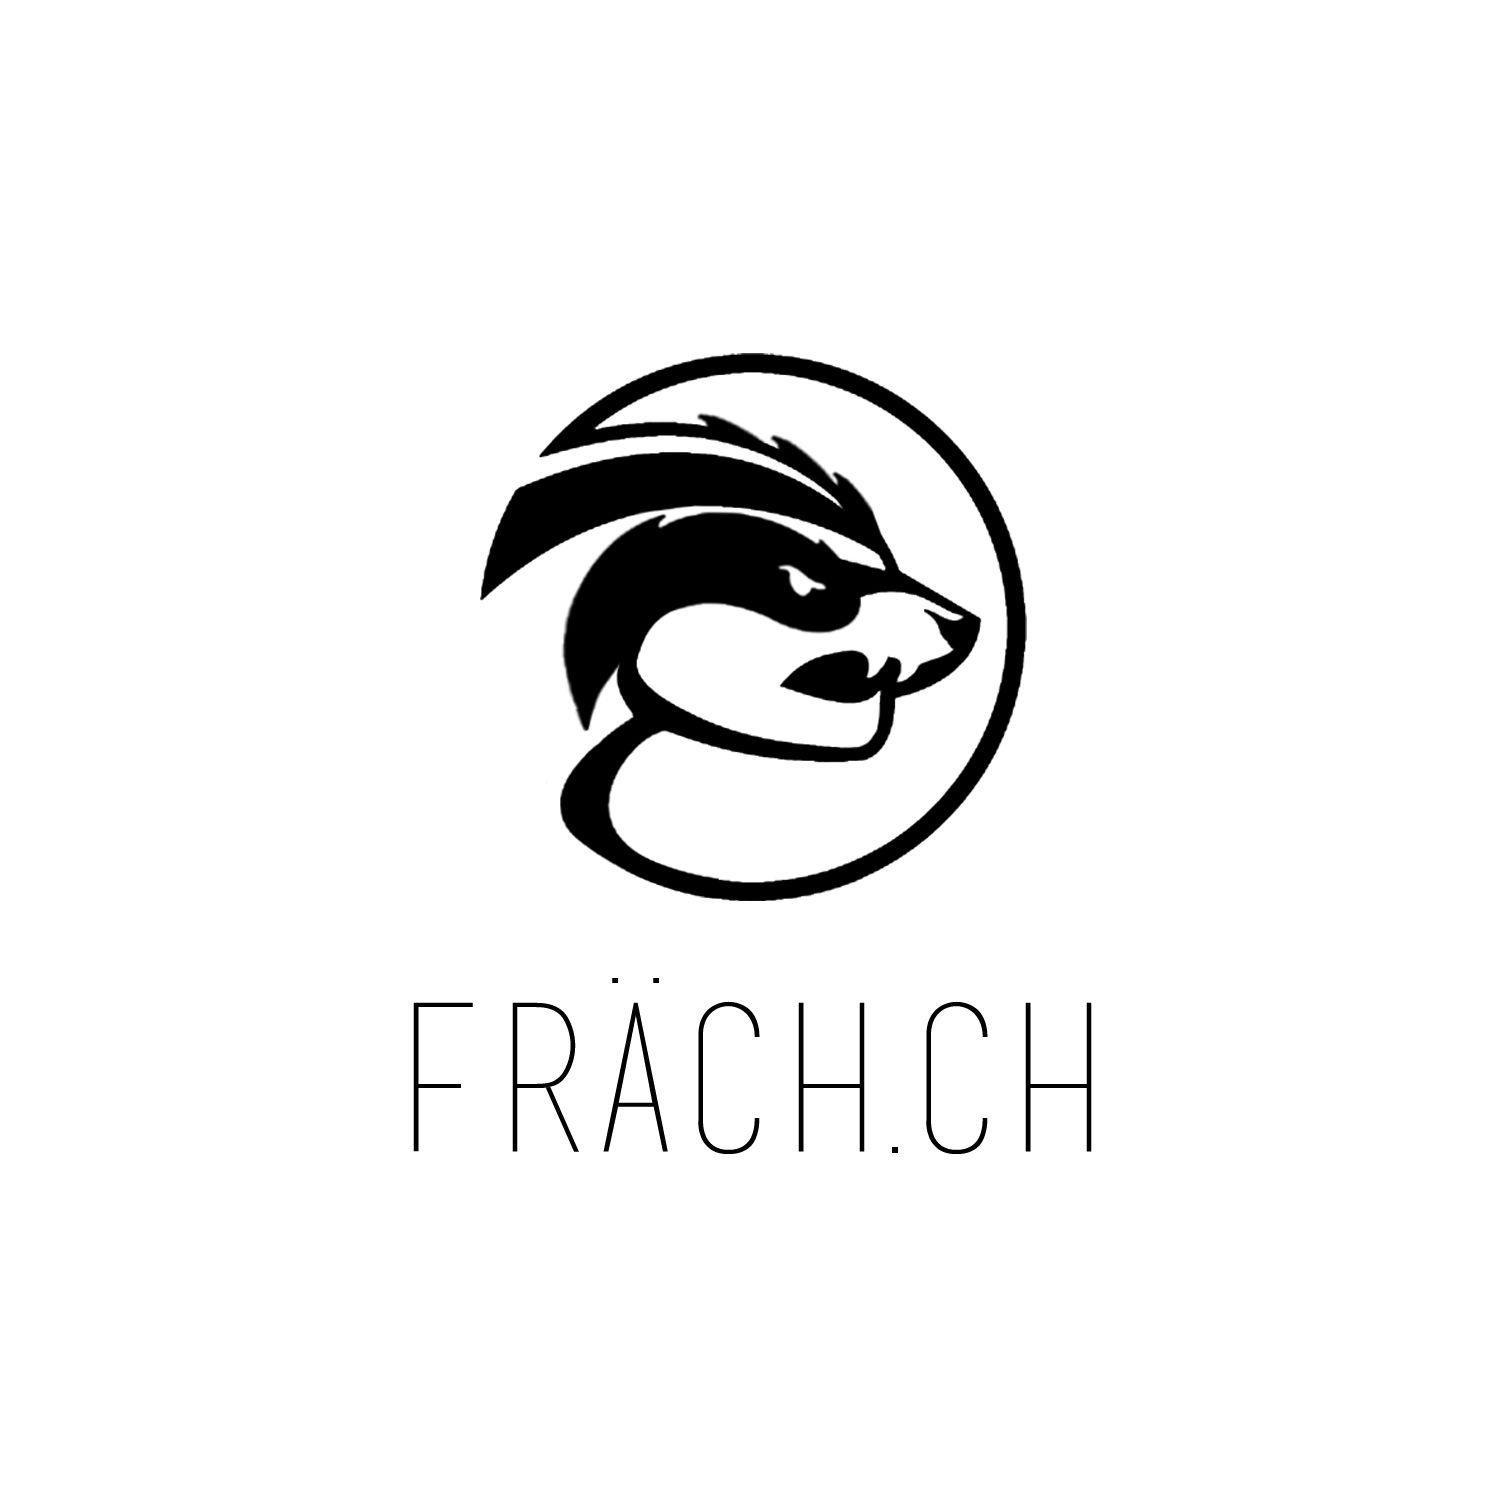 Ashton Company Logo - Modern, Conservative, Fashion Logo Design for FRäCH.ch